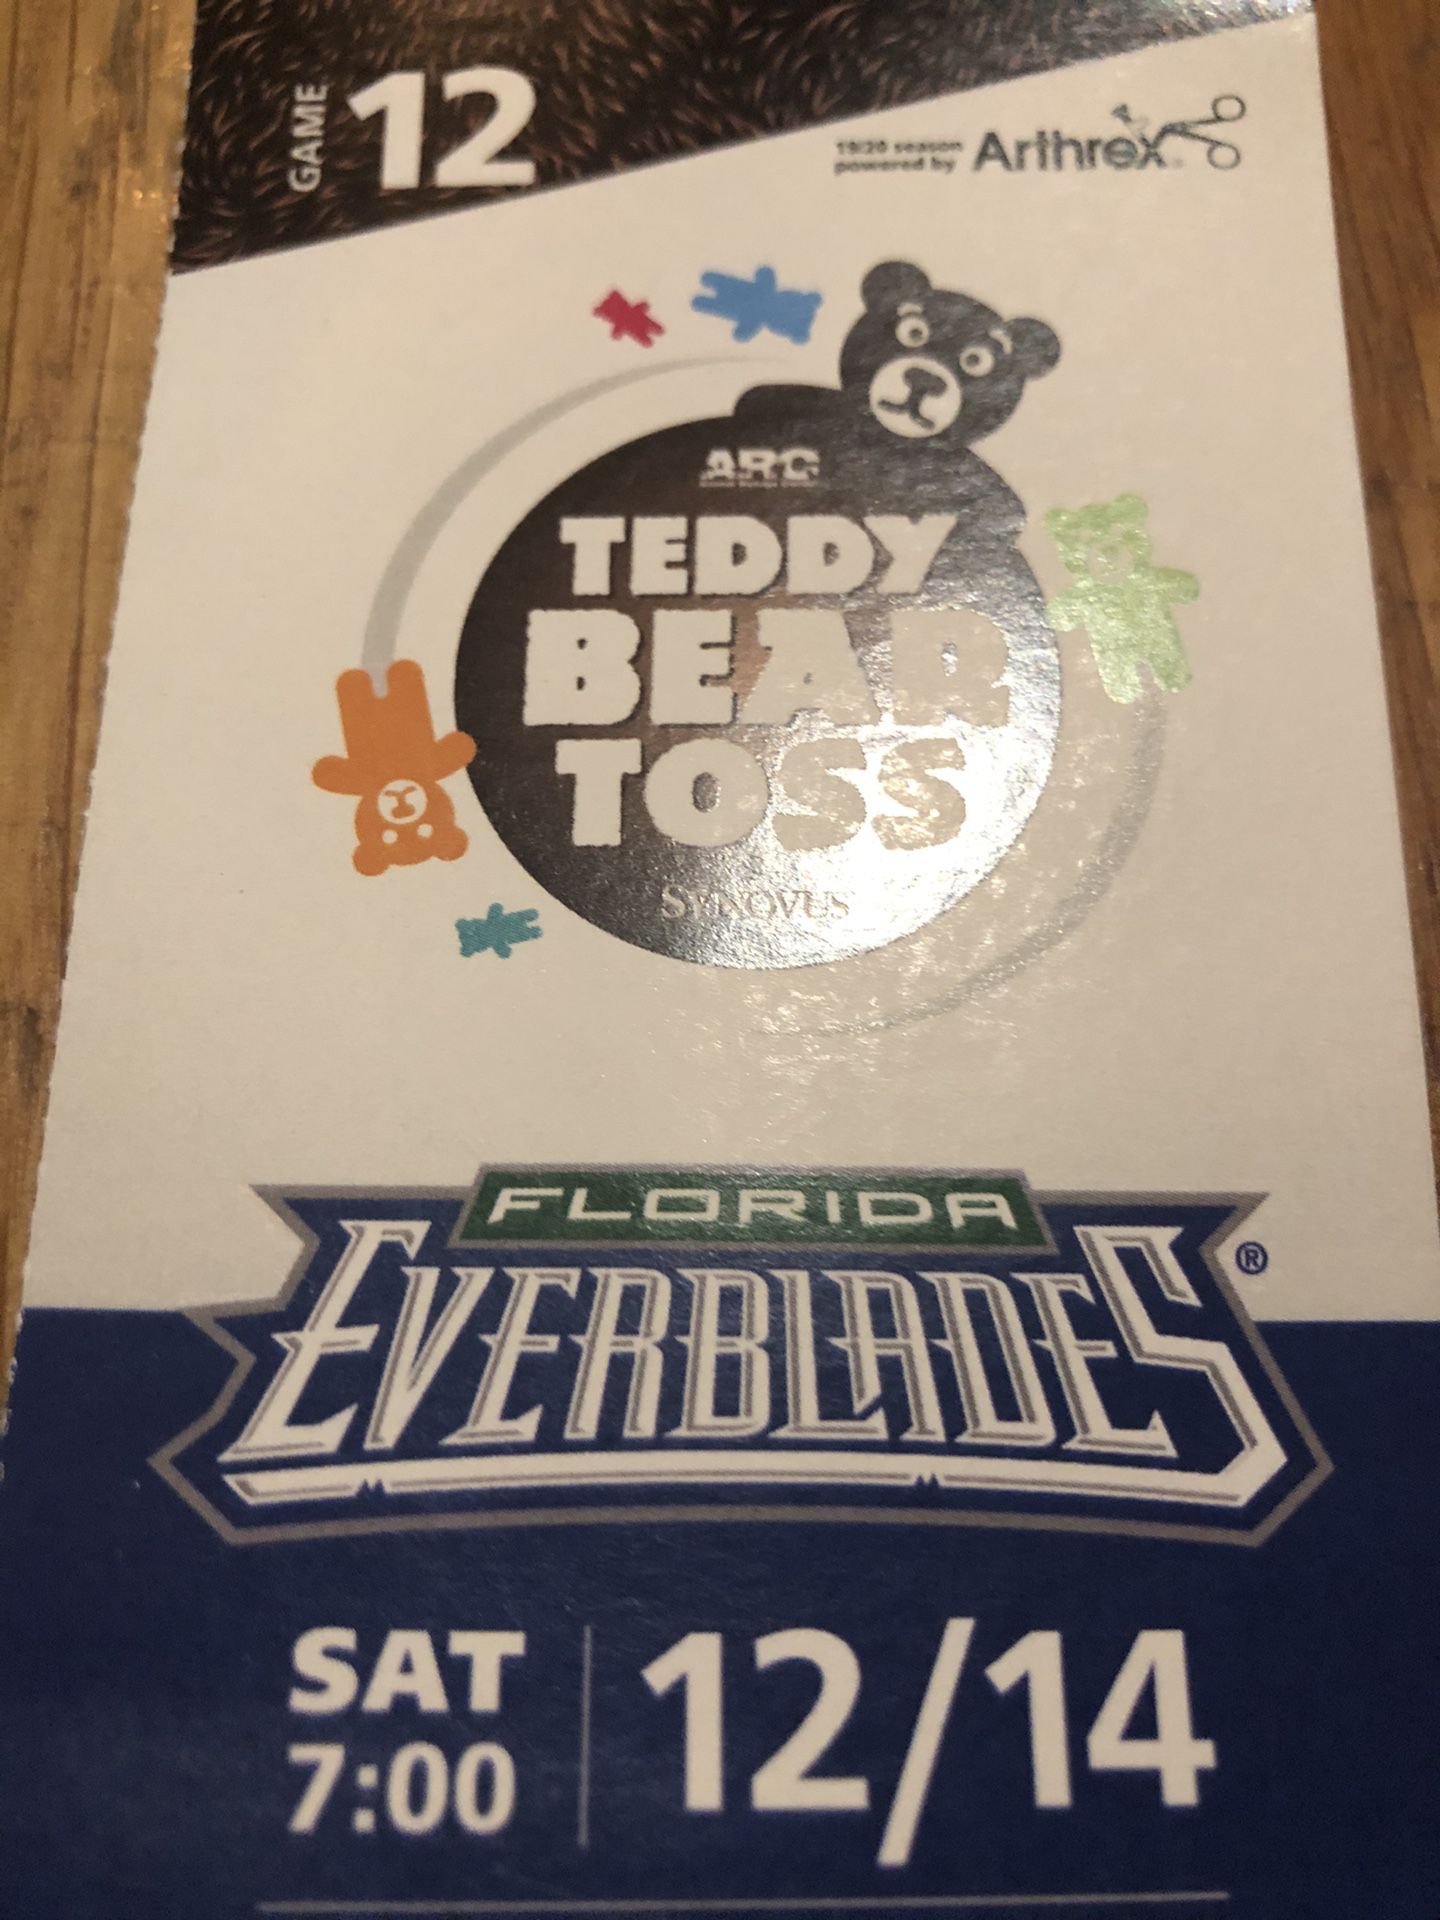 3 everblades tickets. Teddy Bear toss tonight